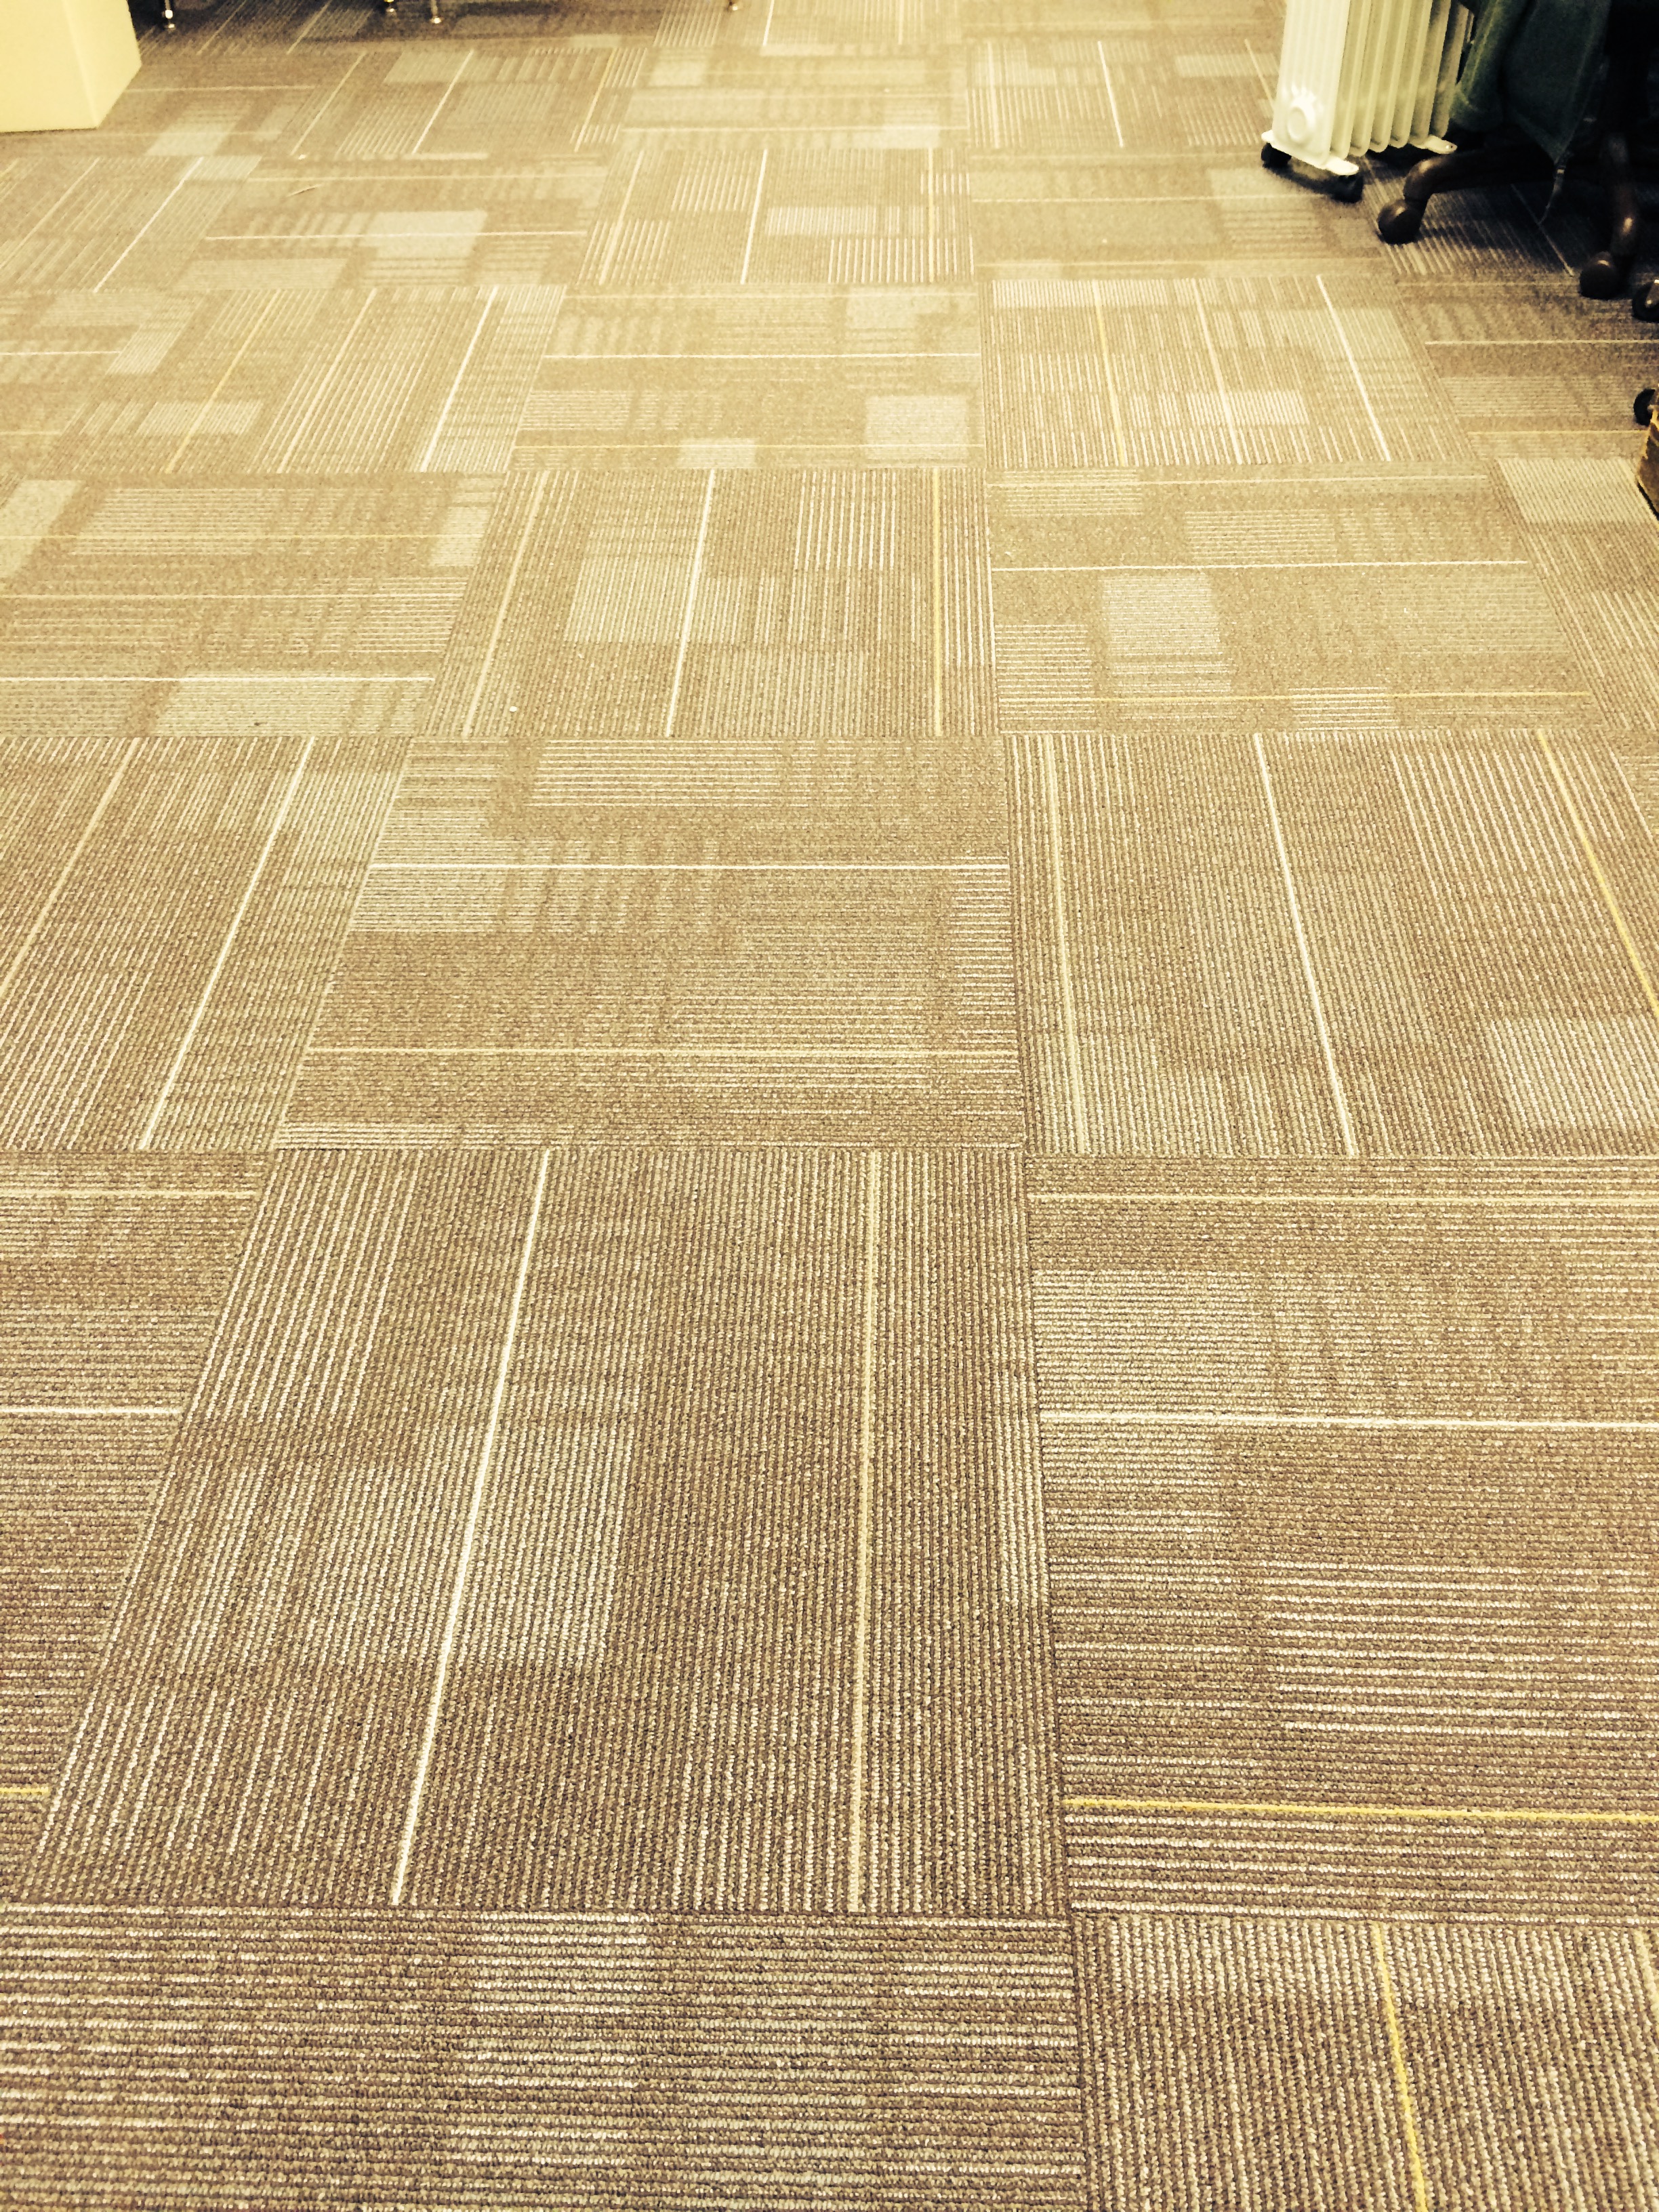 Executive Carpet & Beyond - Carpeting